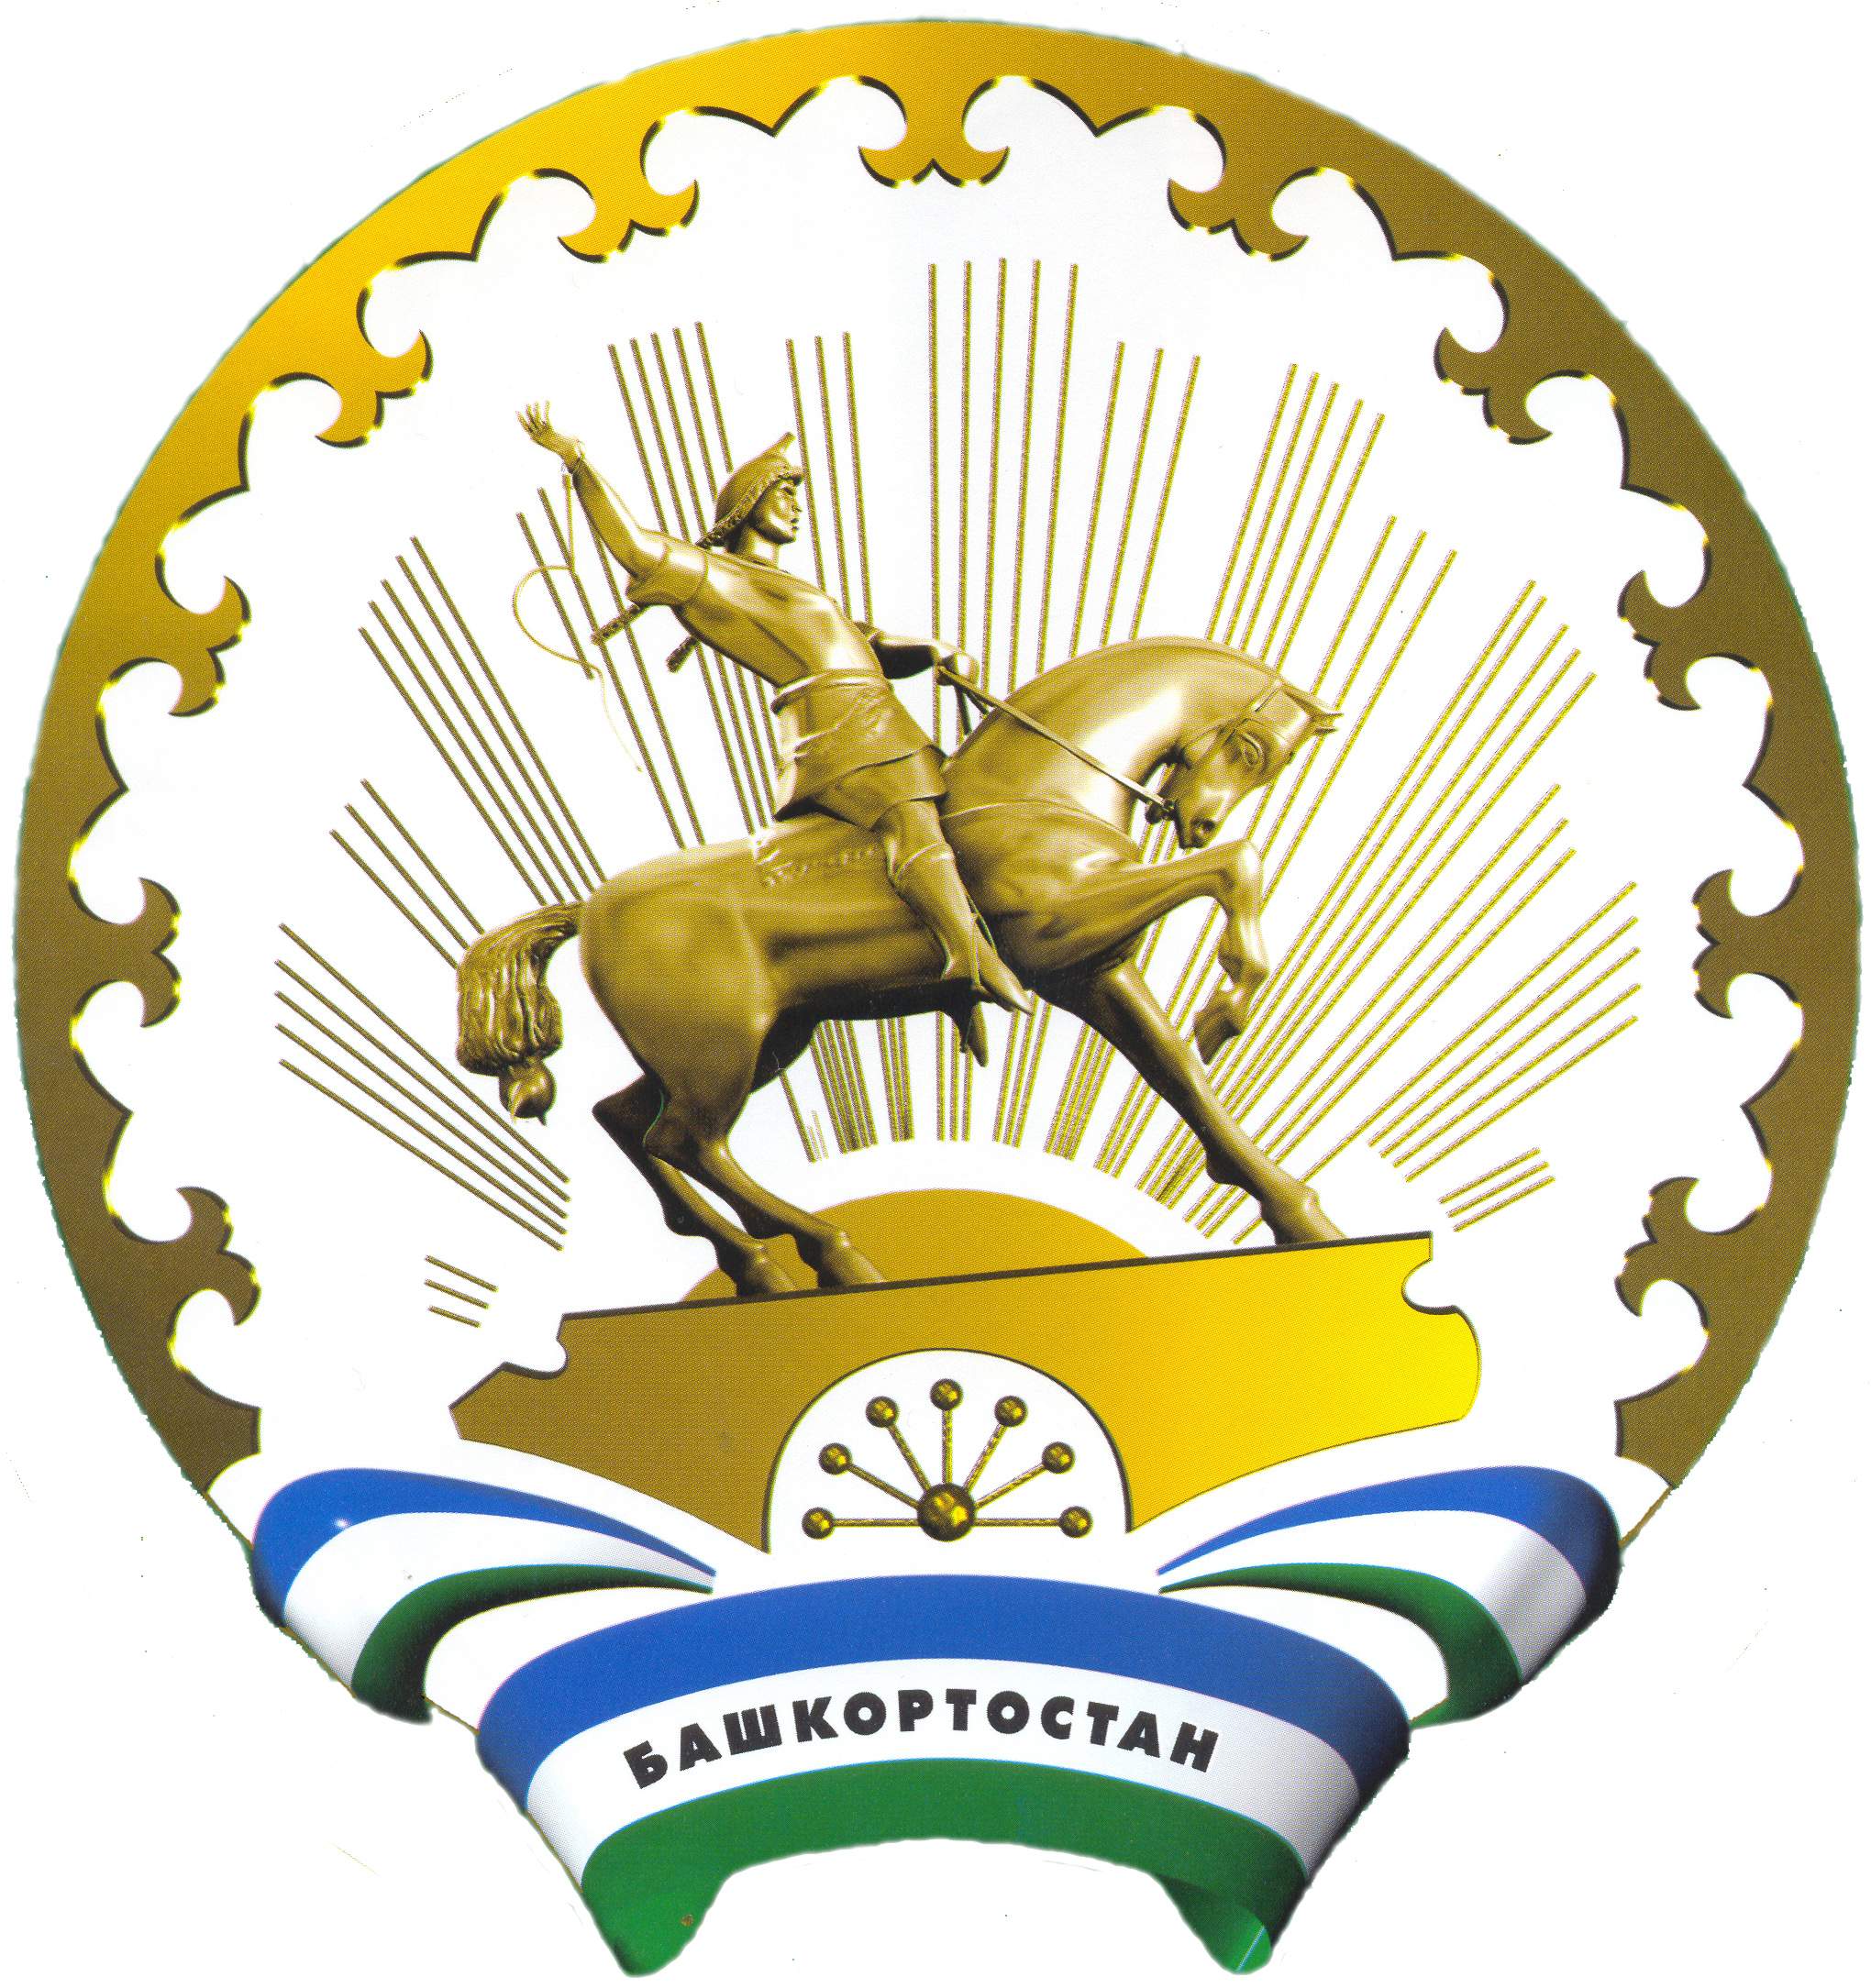 Производственный календарь Башкортостана 2019 года